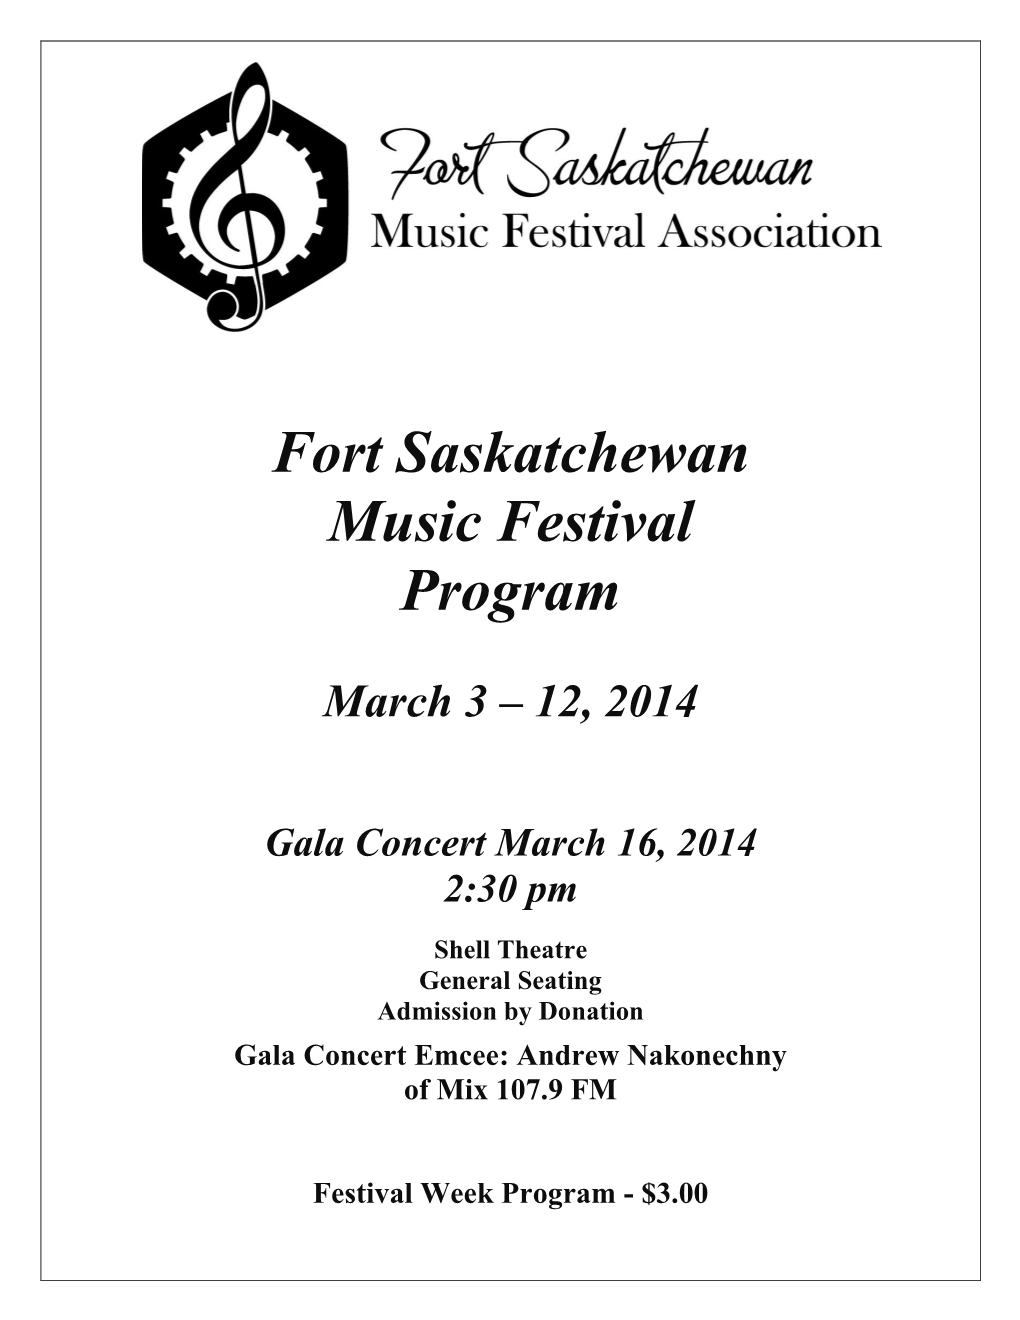 Fort Saskatchewan Music Festival Program